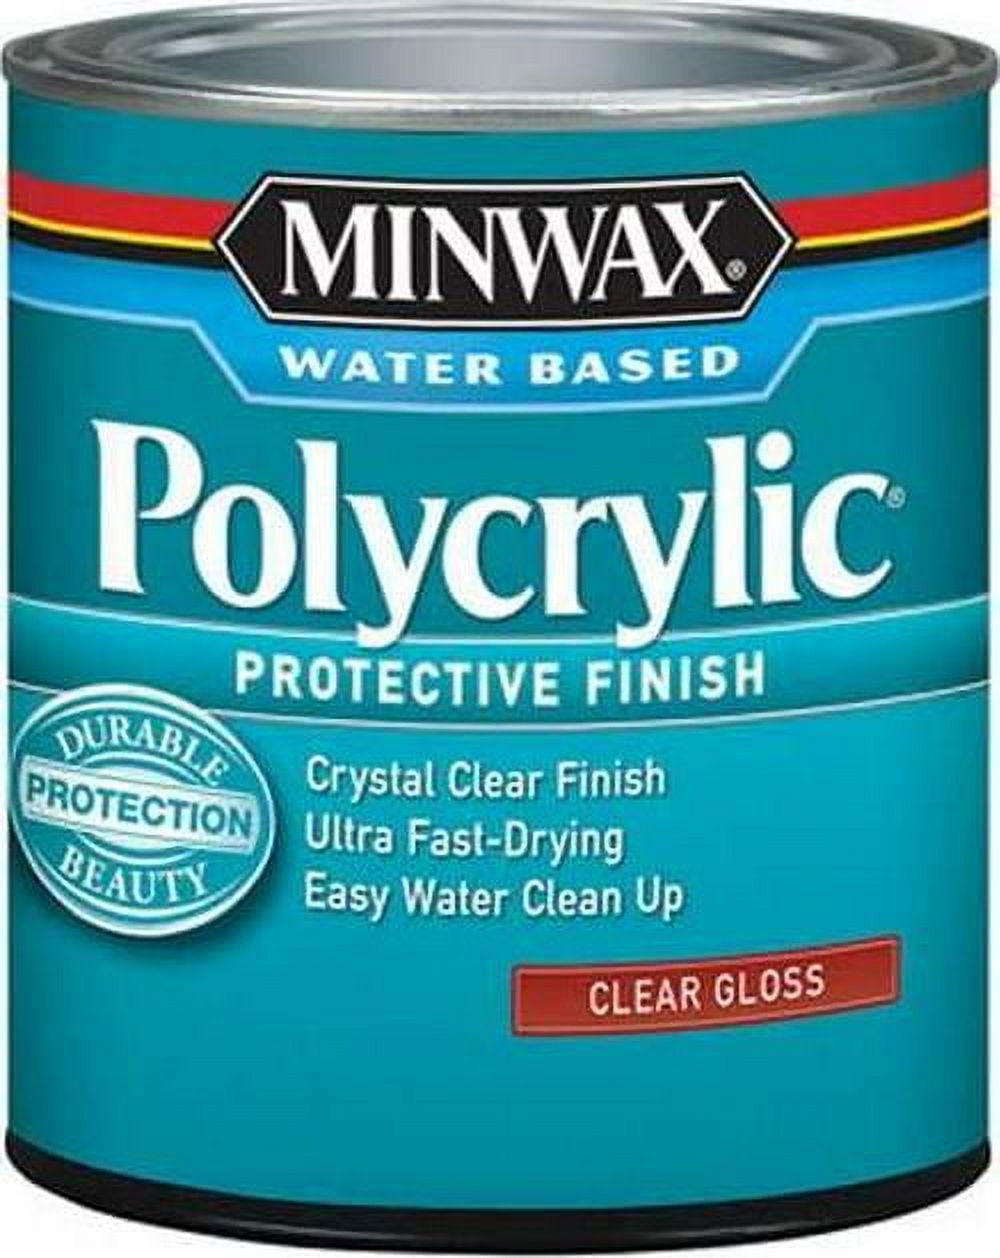 Polycrylic - Clear Gloss